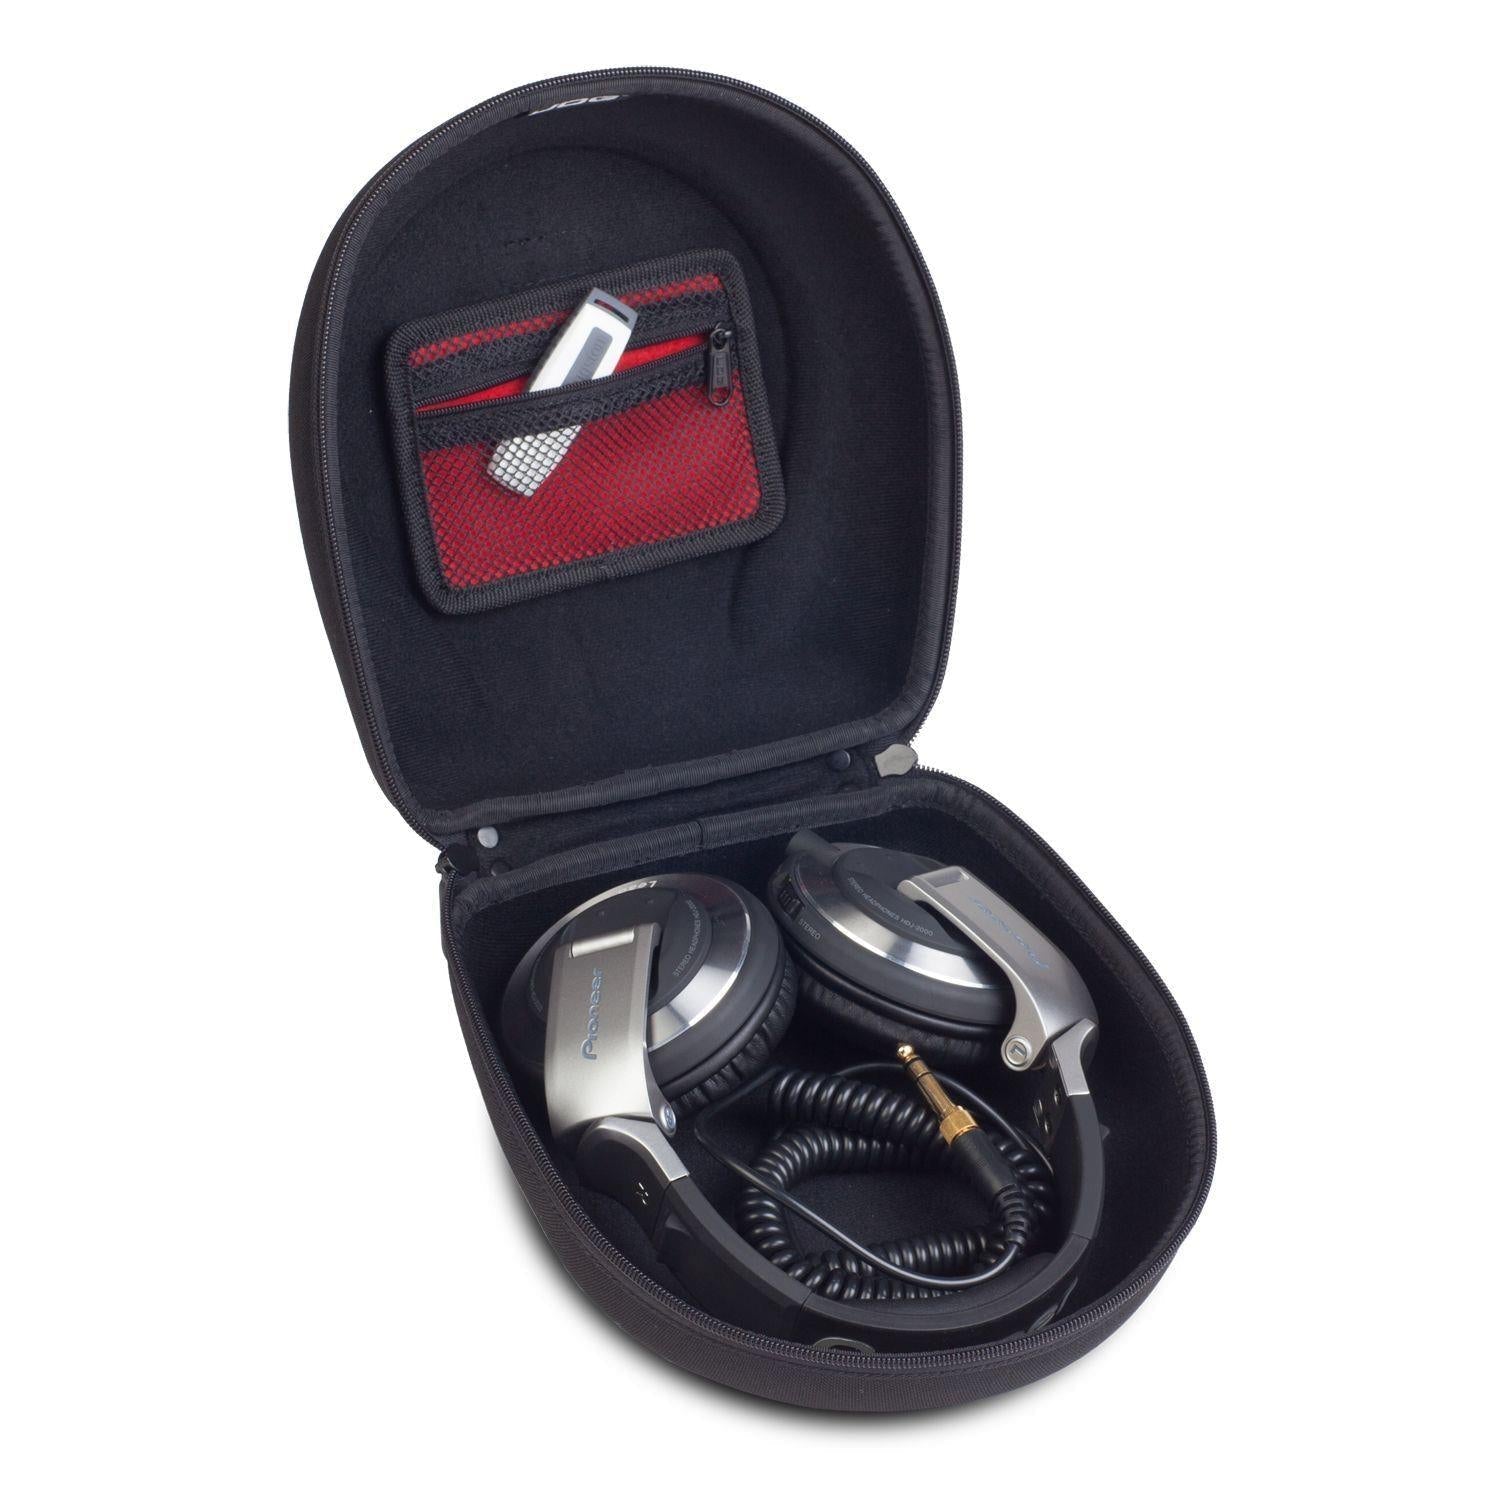 UDG Creator Headphone Case Large Black - DY Pro Audio